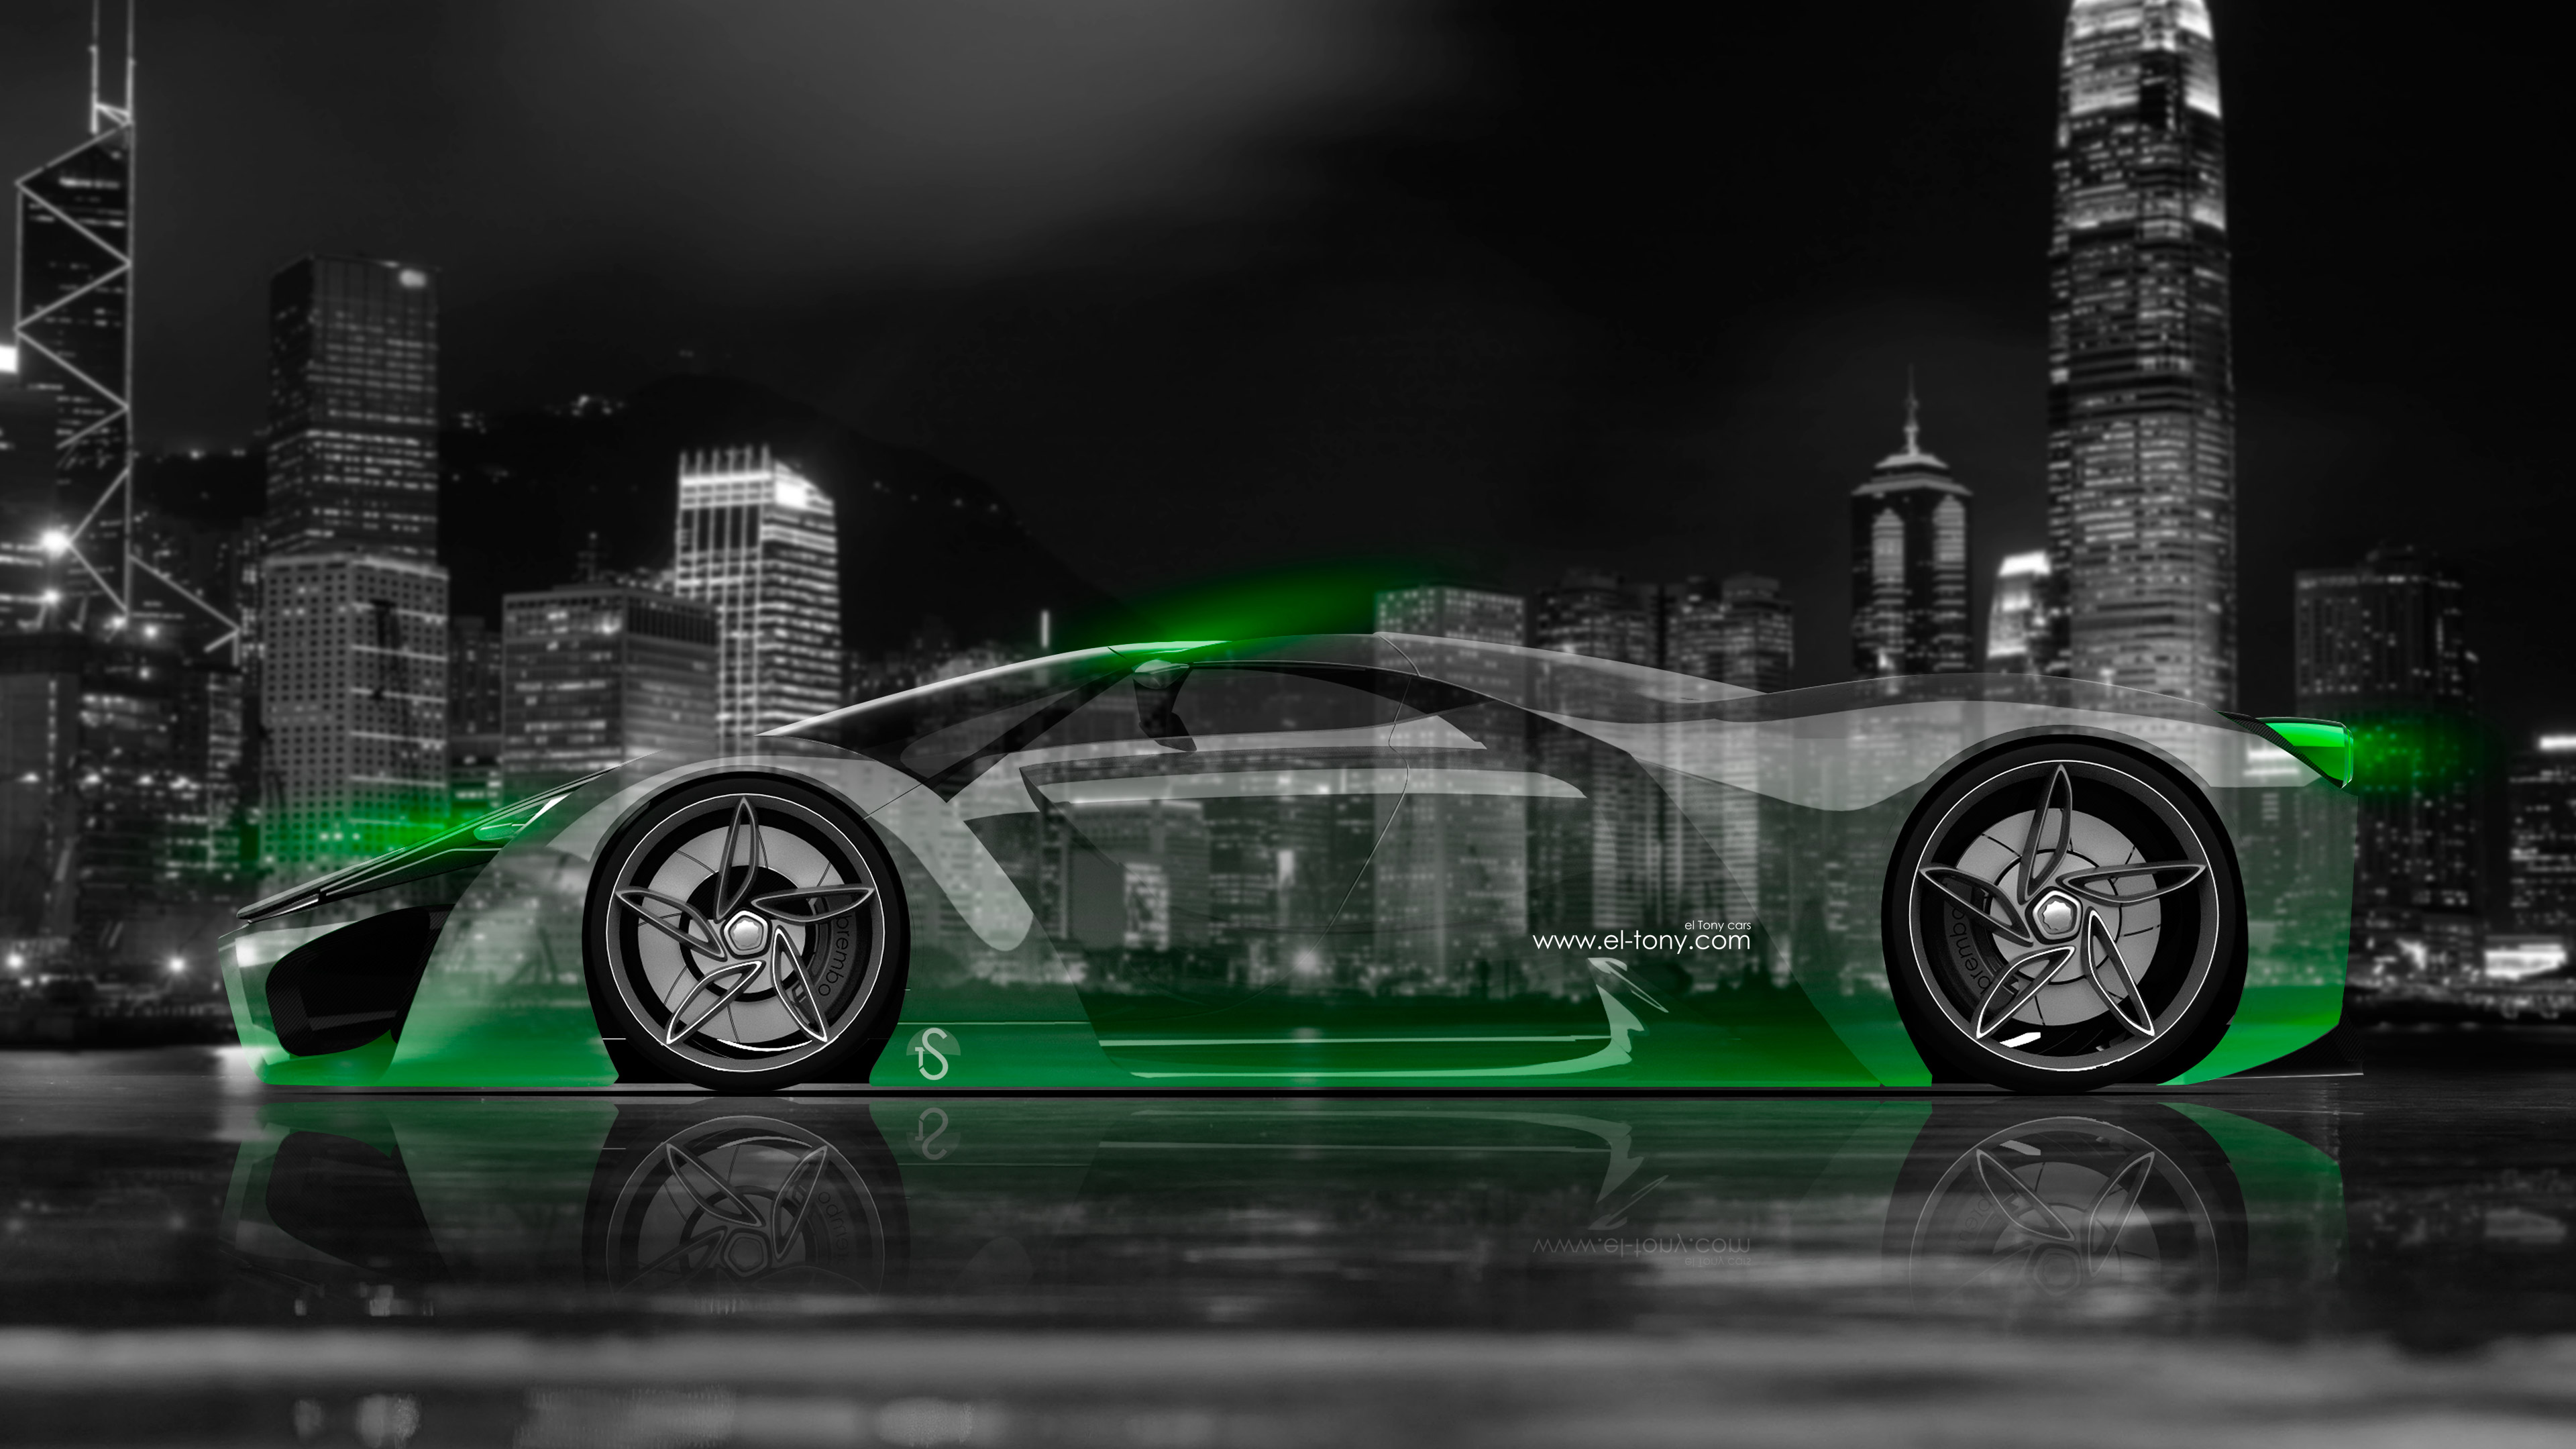 Free download Ferrari F80 Side Crystal City Car 2014 Green Neon 4K Wallpaper design [3840x2160] for your Desktop, Mobile & Tablet. Explore 4K Car WallpaperK Car Wallpaper, 4K